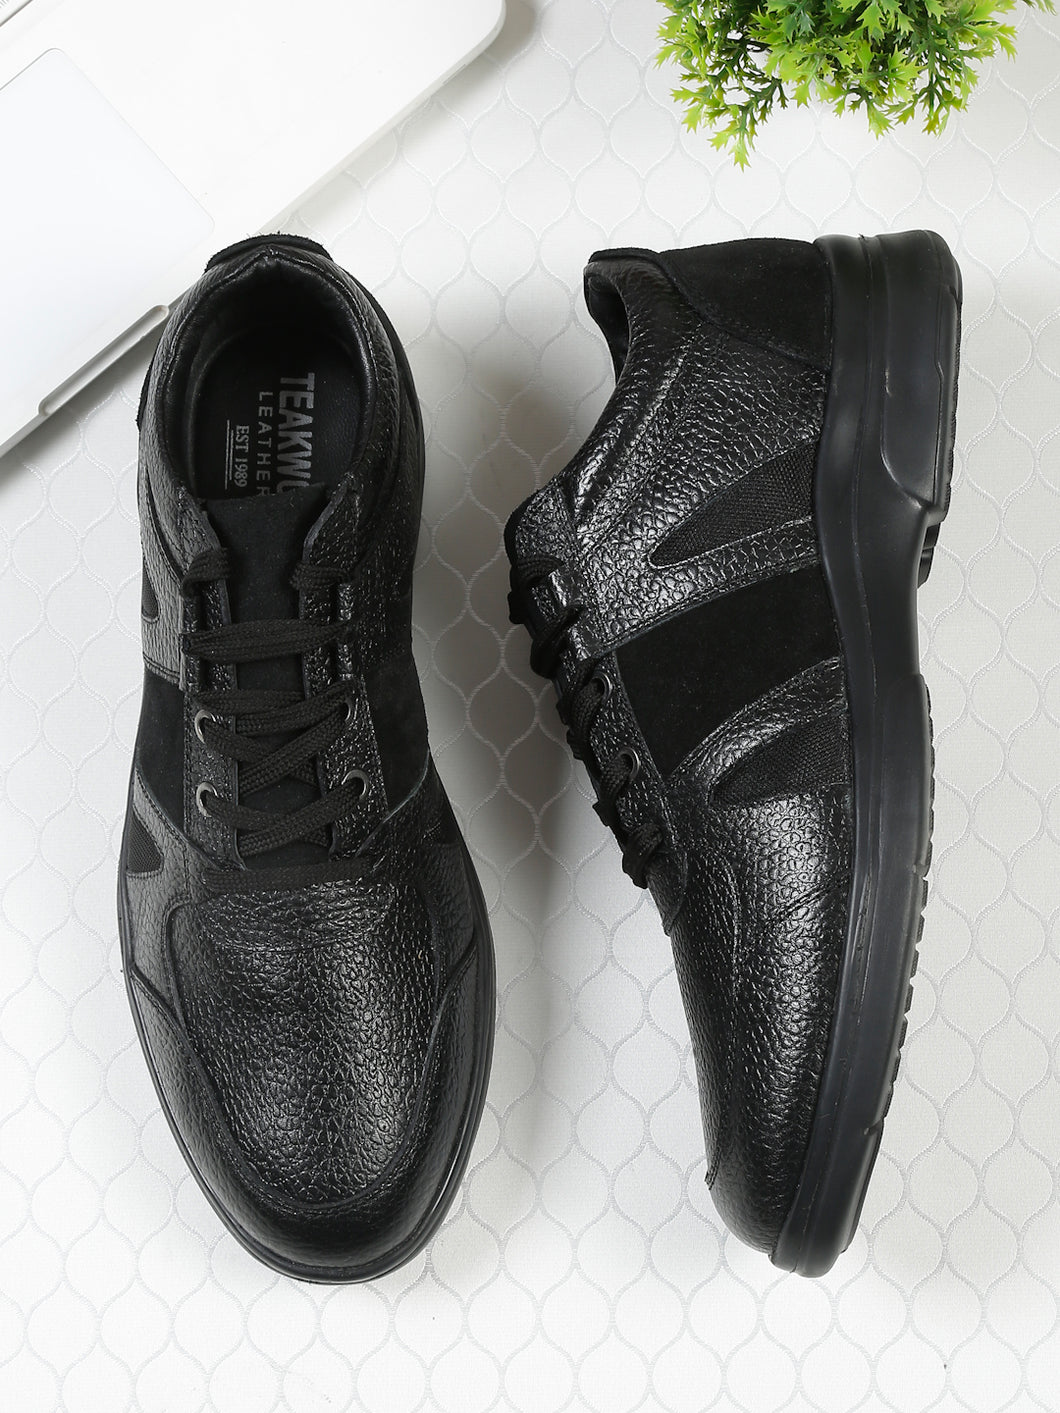 Men Black Leather Lace-Up Semi-Formal shoes